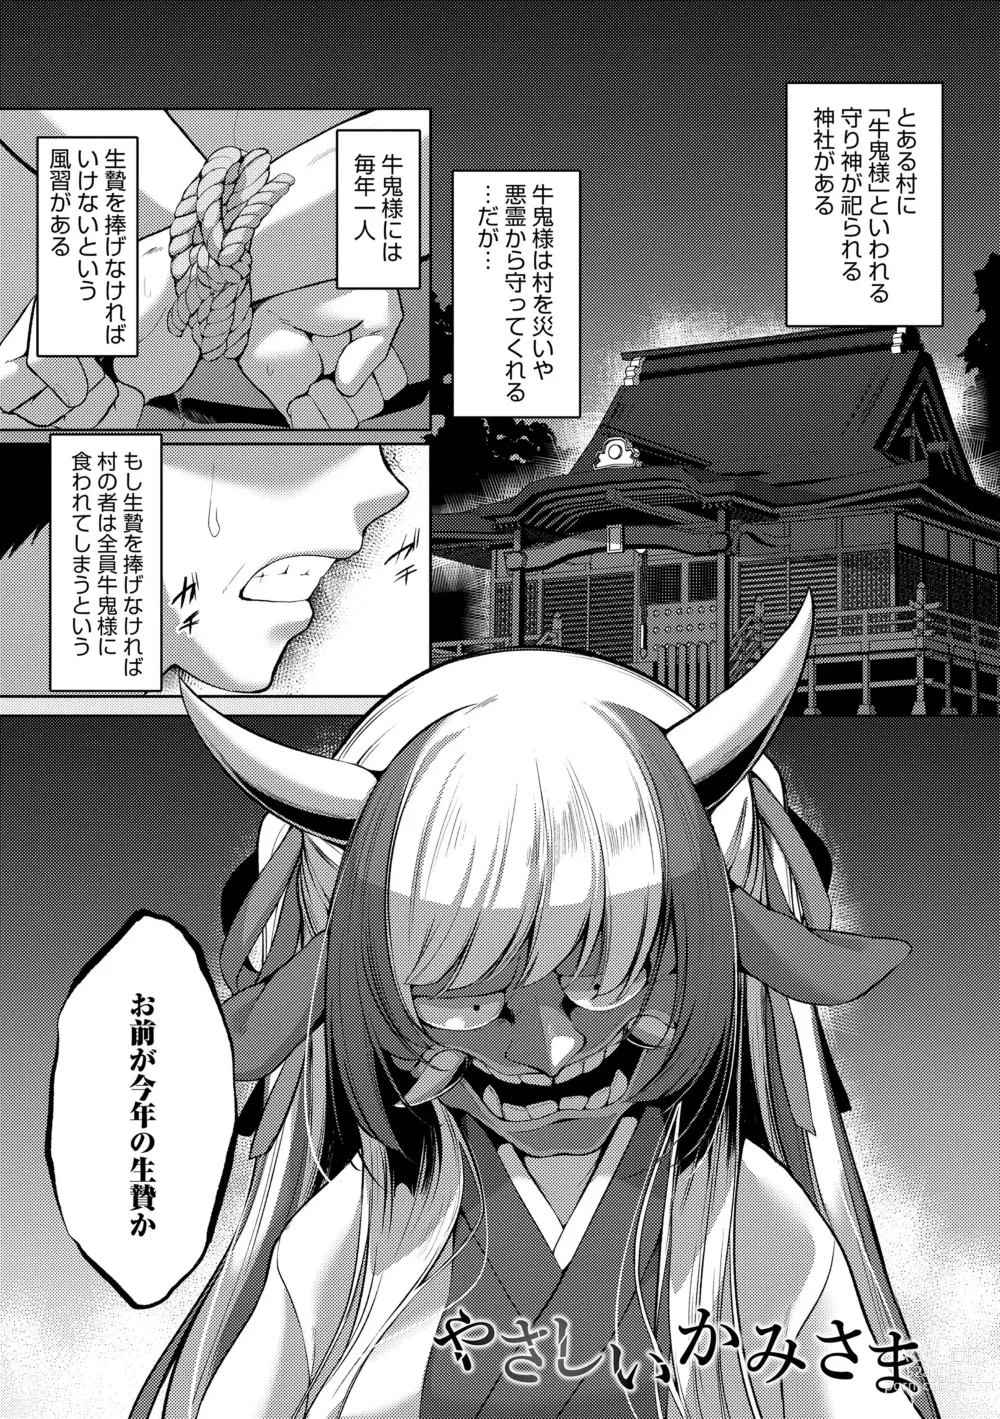 Page 3 of manga Hitoyo Hitoyo Ouse no Mamani